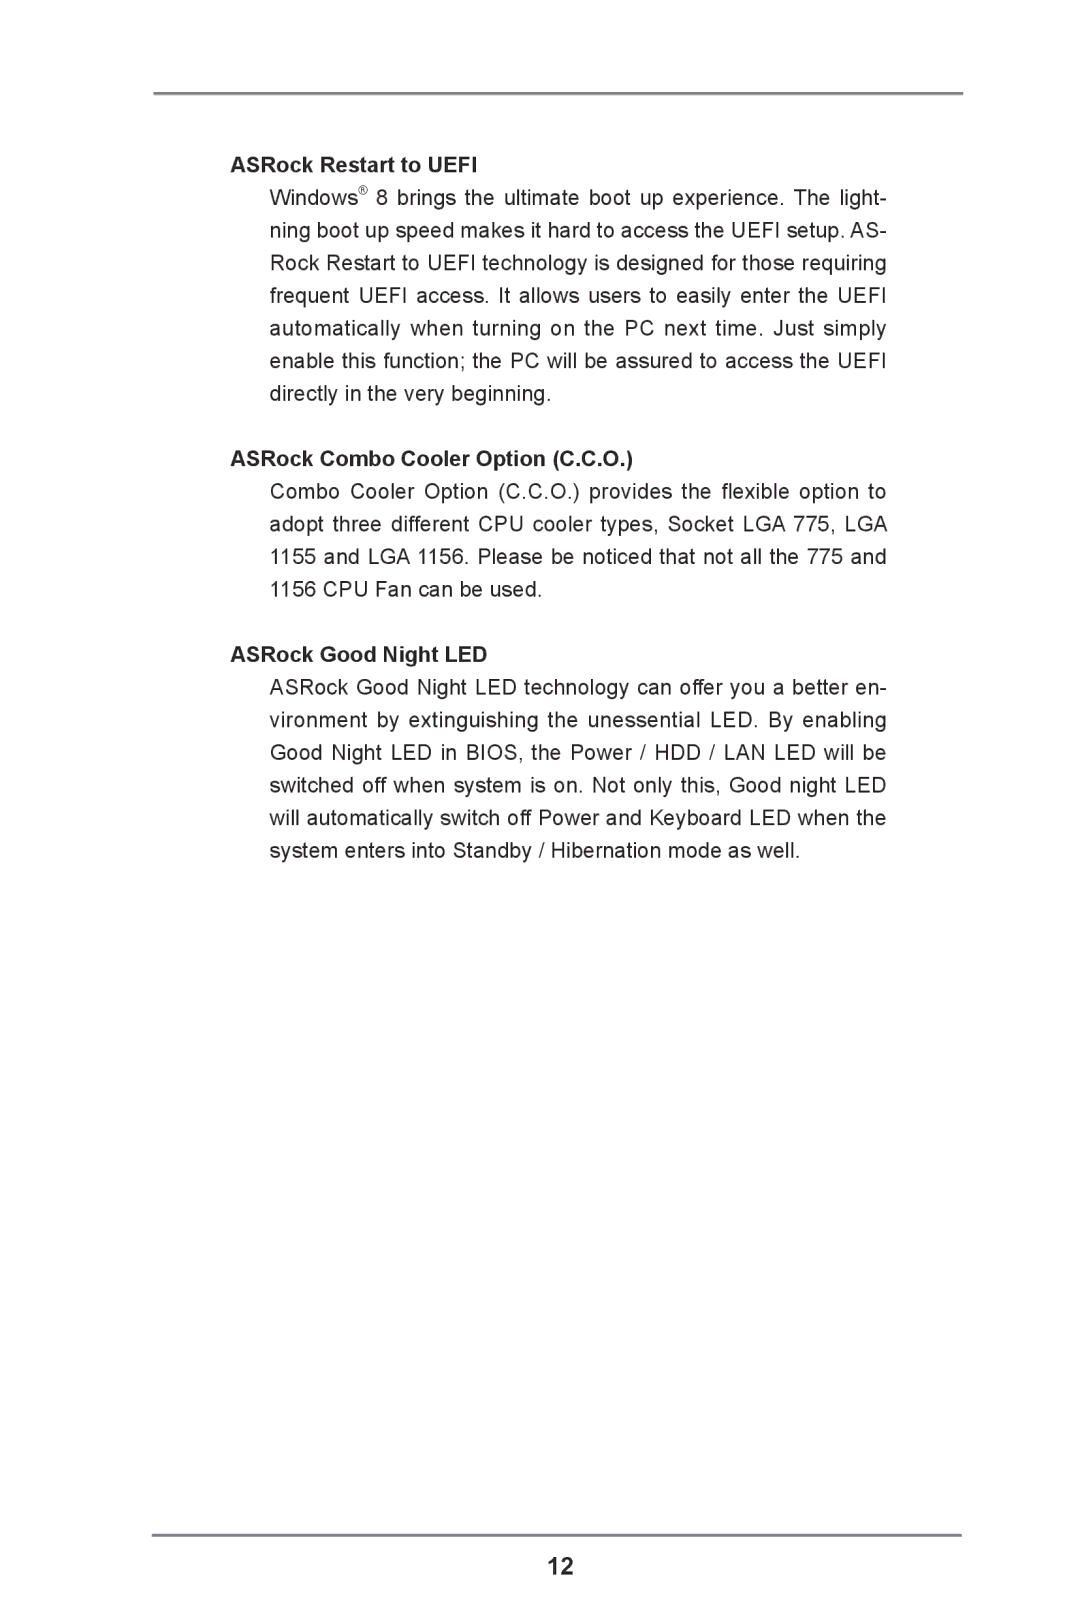 ASRock H61M-HP4 manual ASRock Restart to Uefi, ASRock Combo Cooler Option C.C.O, ASRock Good Night LED 